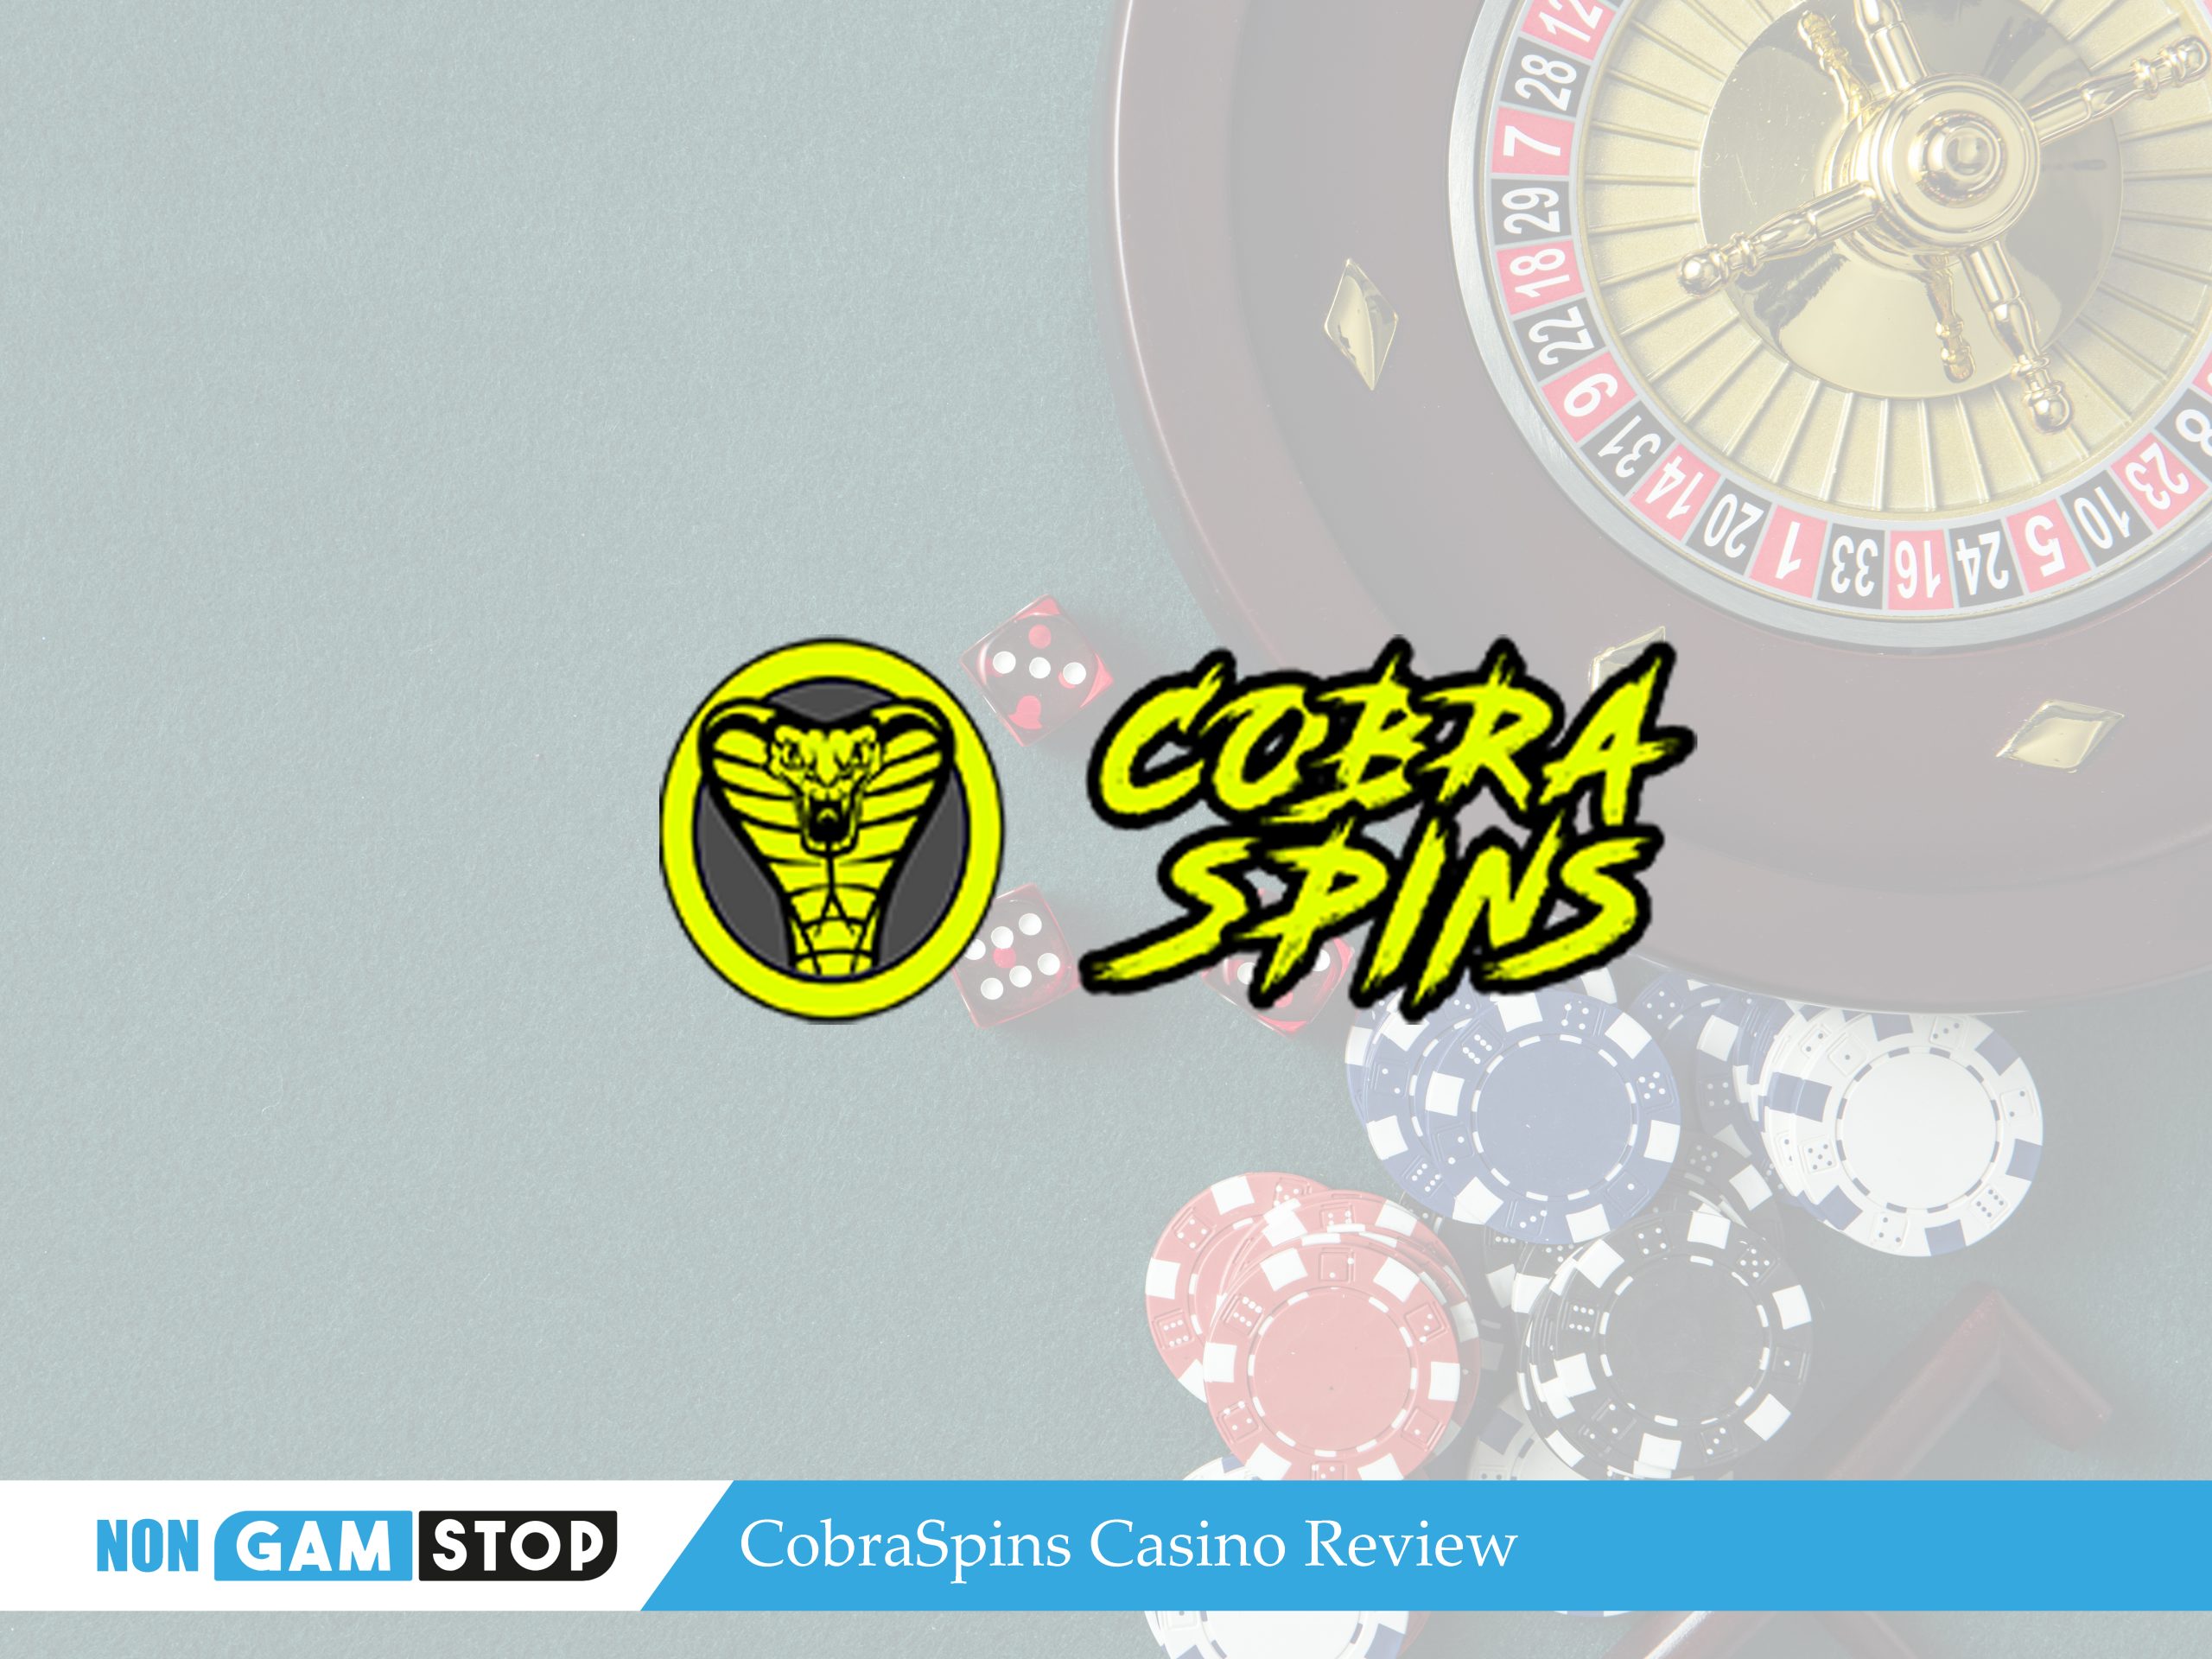 CobraSpins Casino Review